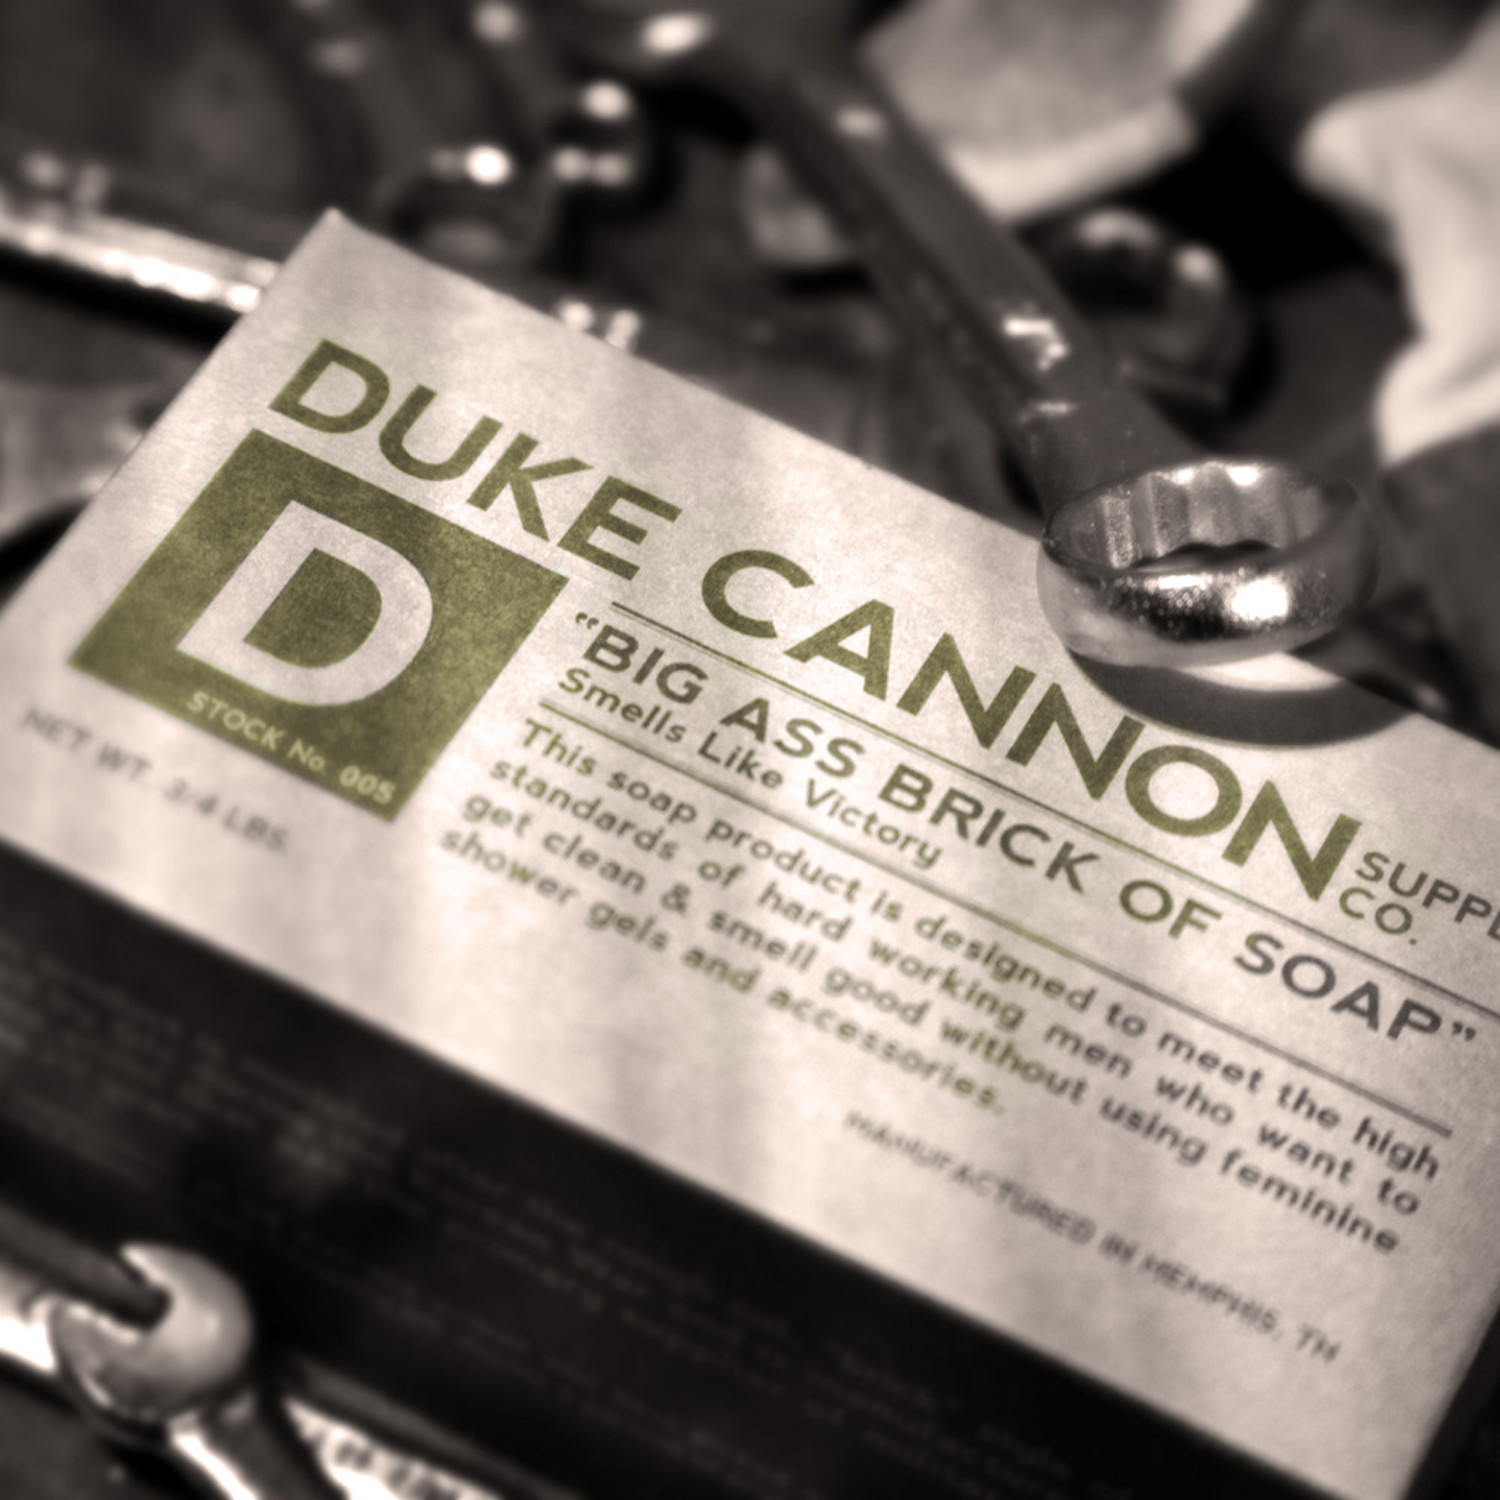 Duke Cannon supply co. Brick of soap